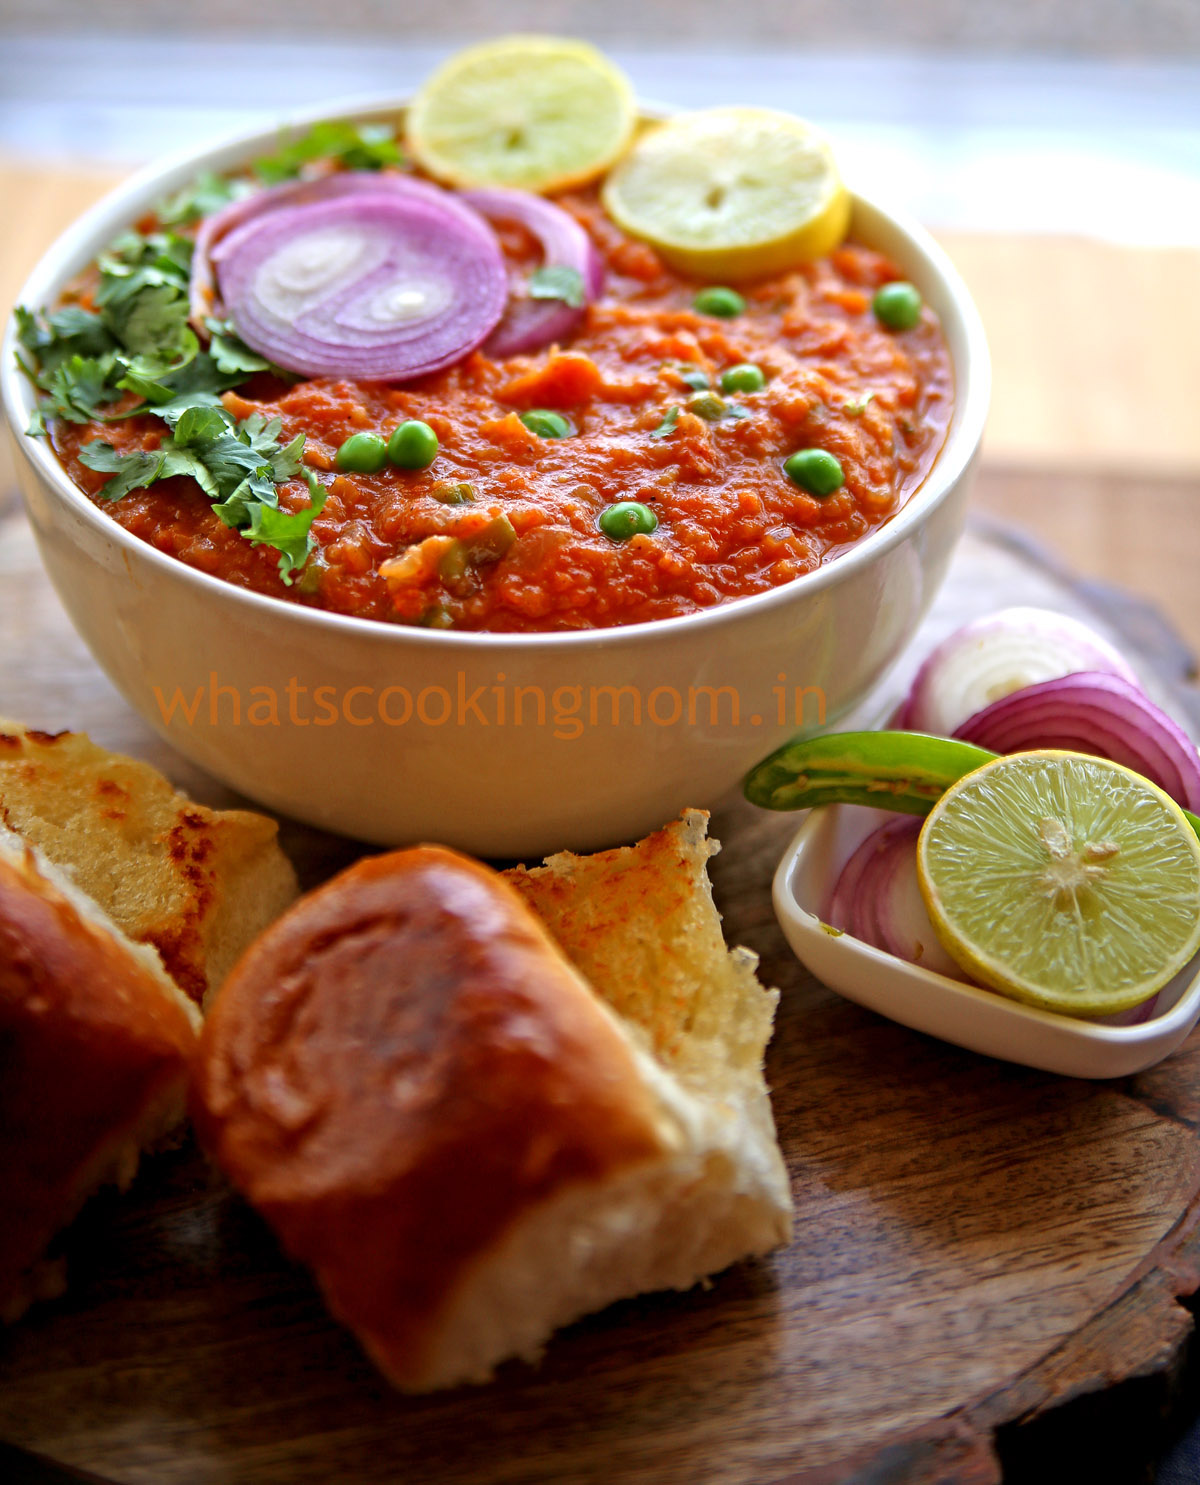  Pav Bhaji - Vegetarian Indian Street food from Mumbai made with mixed vegetables and potatoes